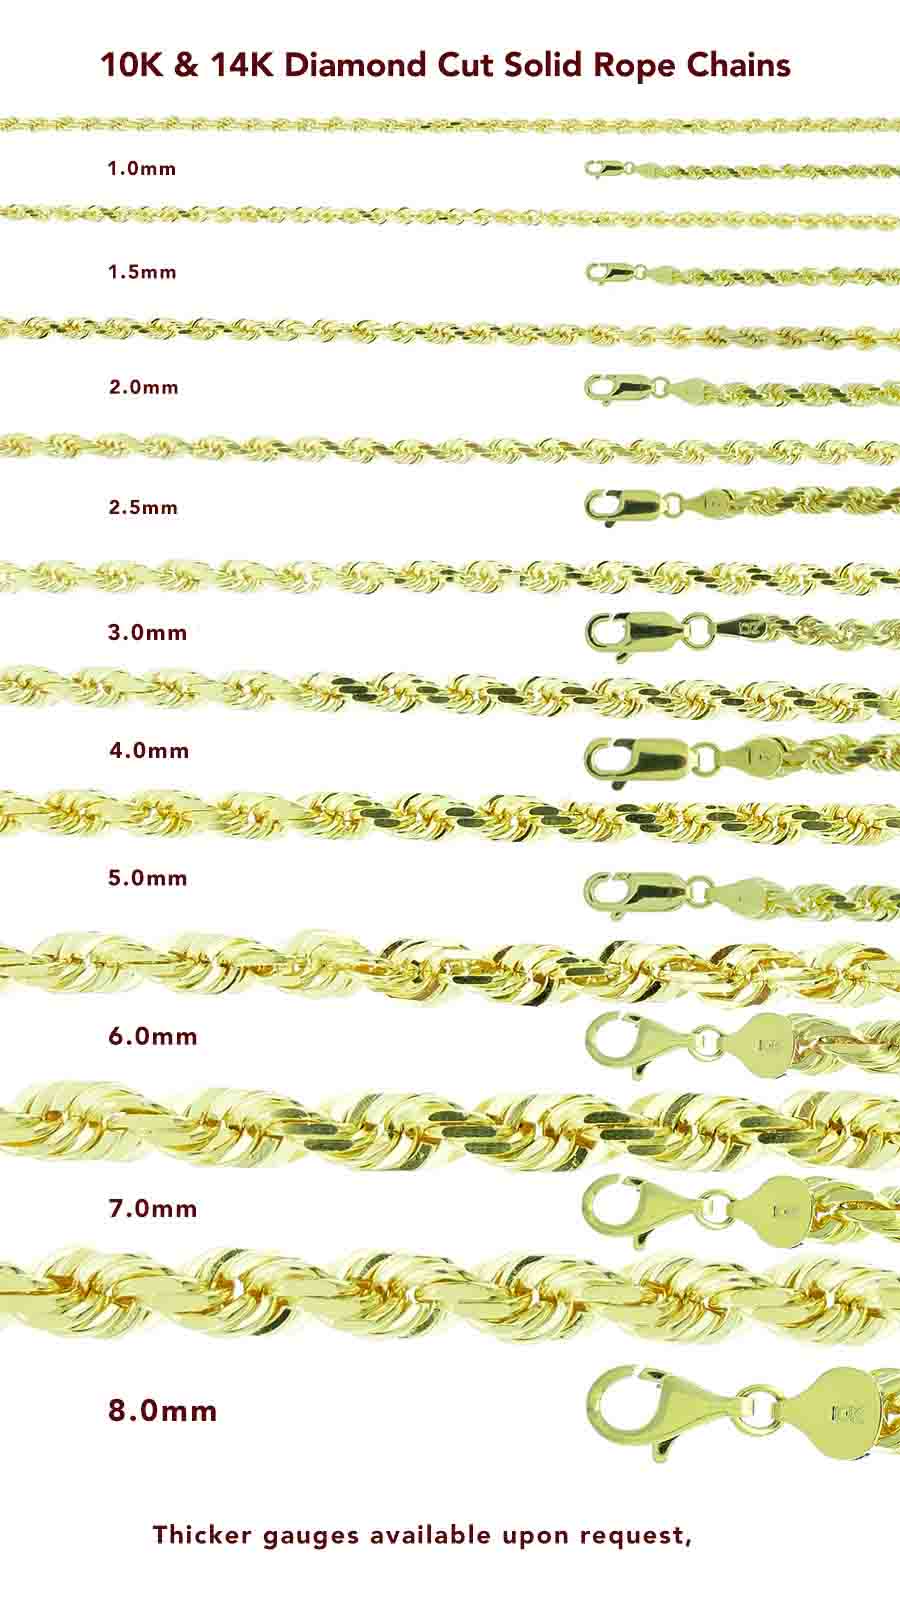 14K Diamond Cut Rope Chain